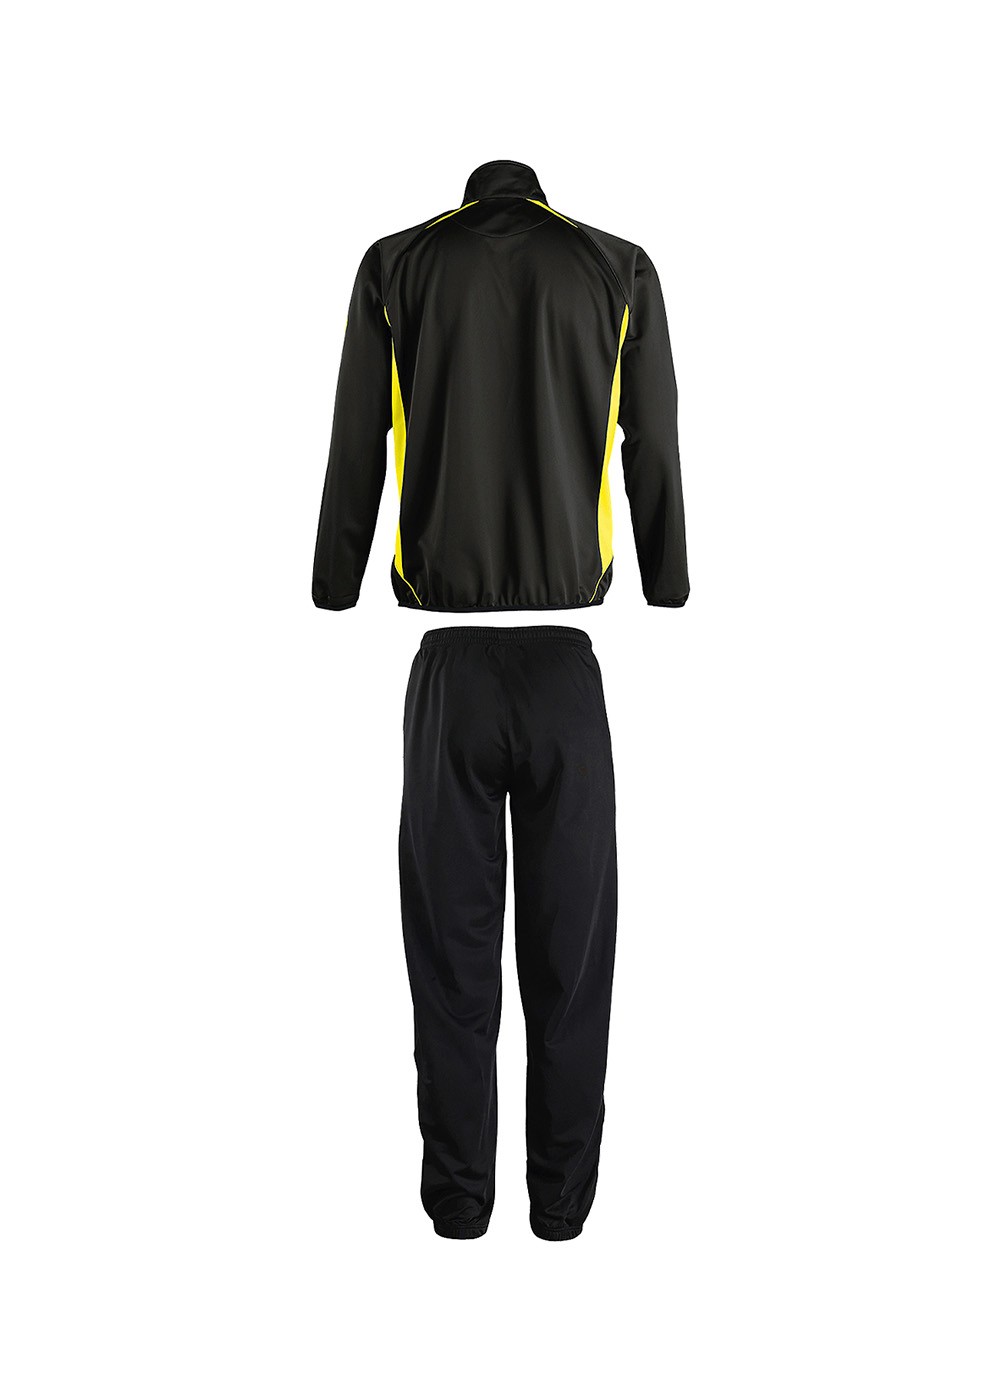 Club Track Suit Black/Lemon/Black